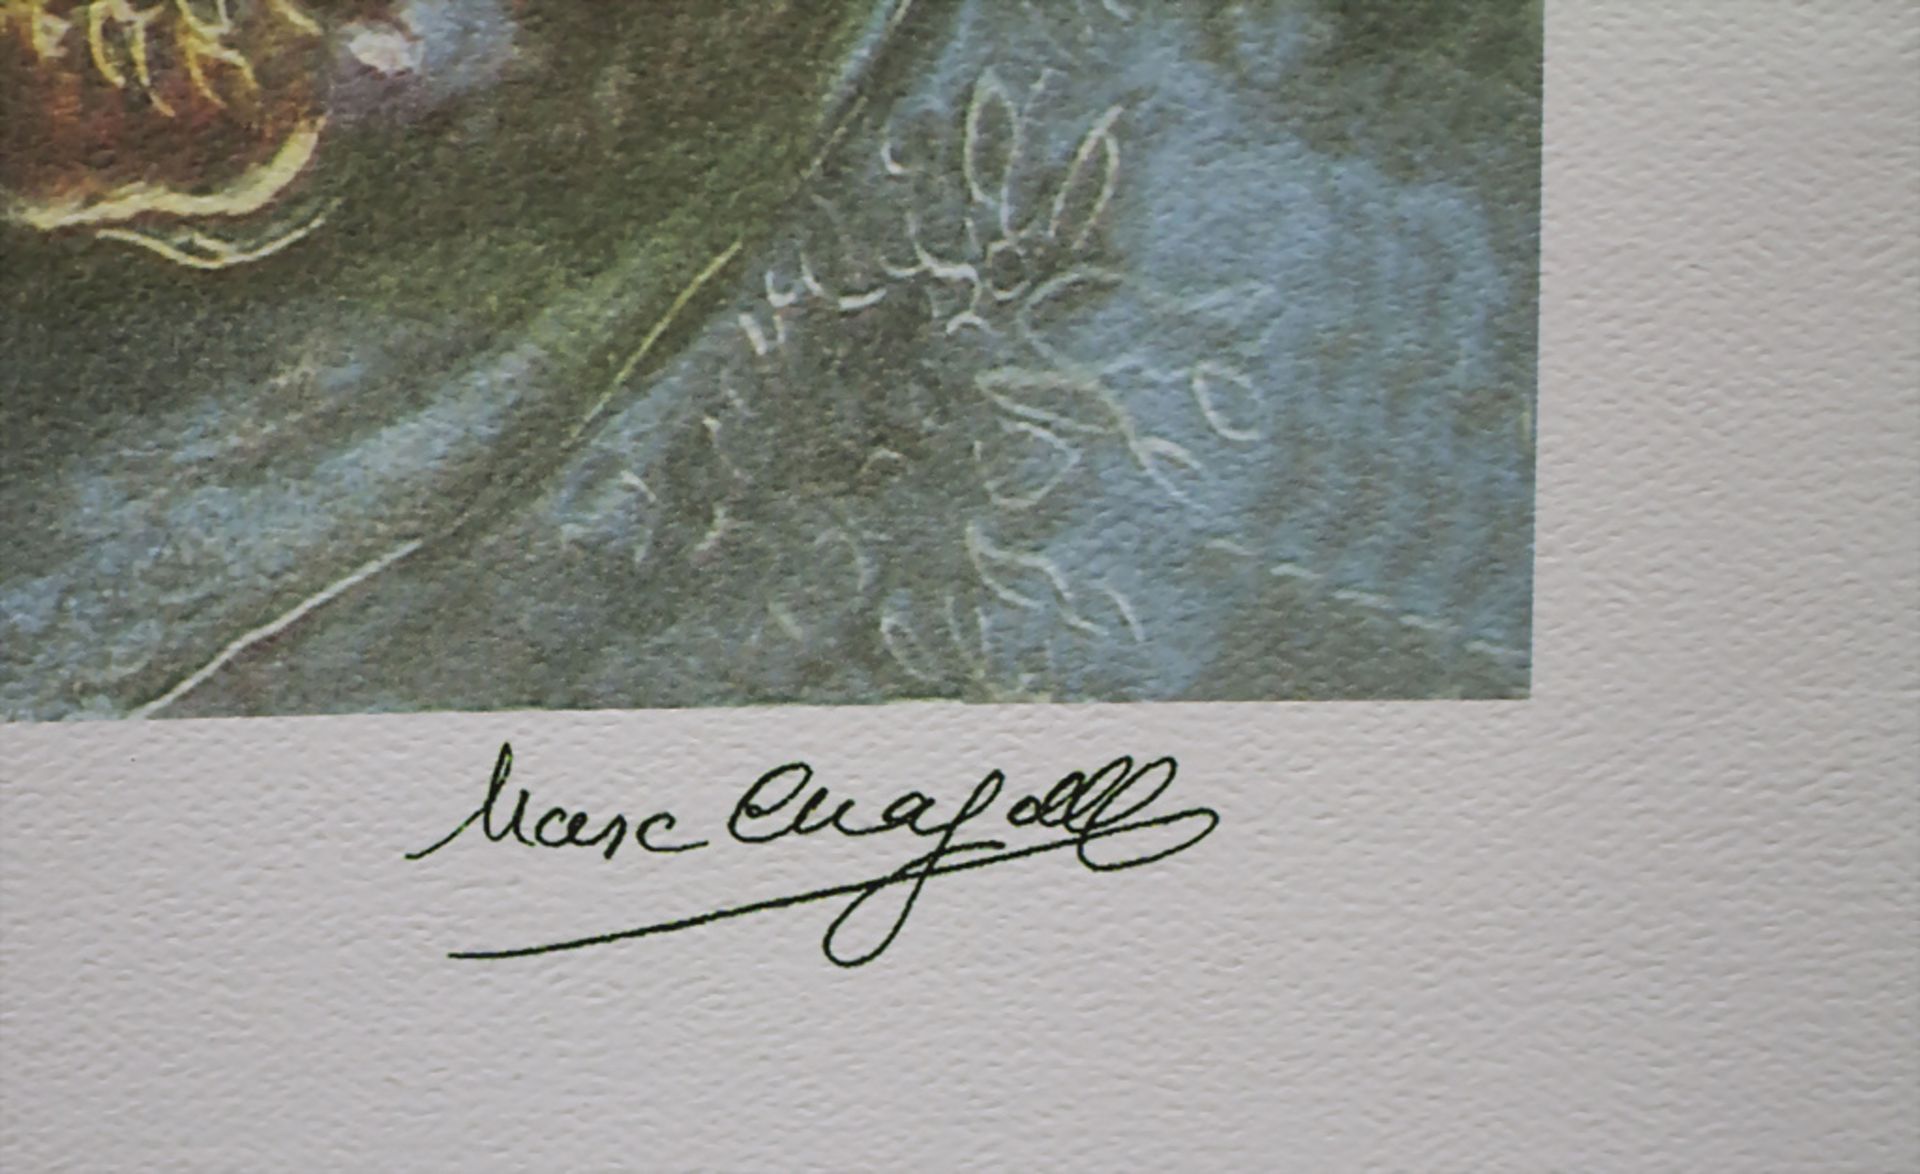 Marc CHAGALL (1887-1985), 'Bella', um 1989 - Image 3 of 4